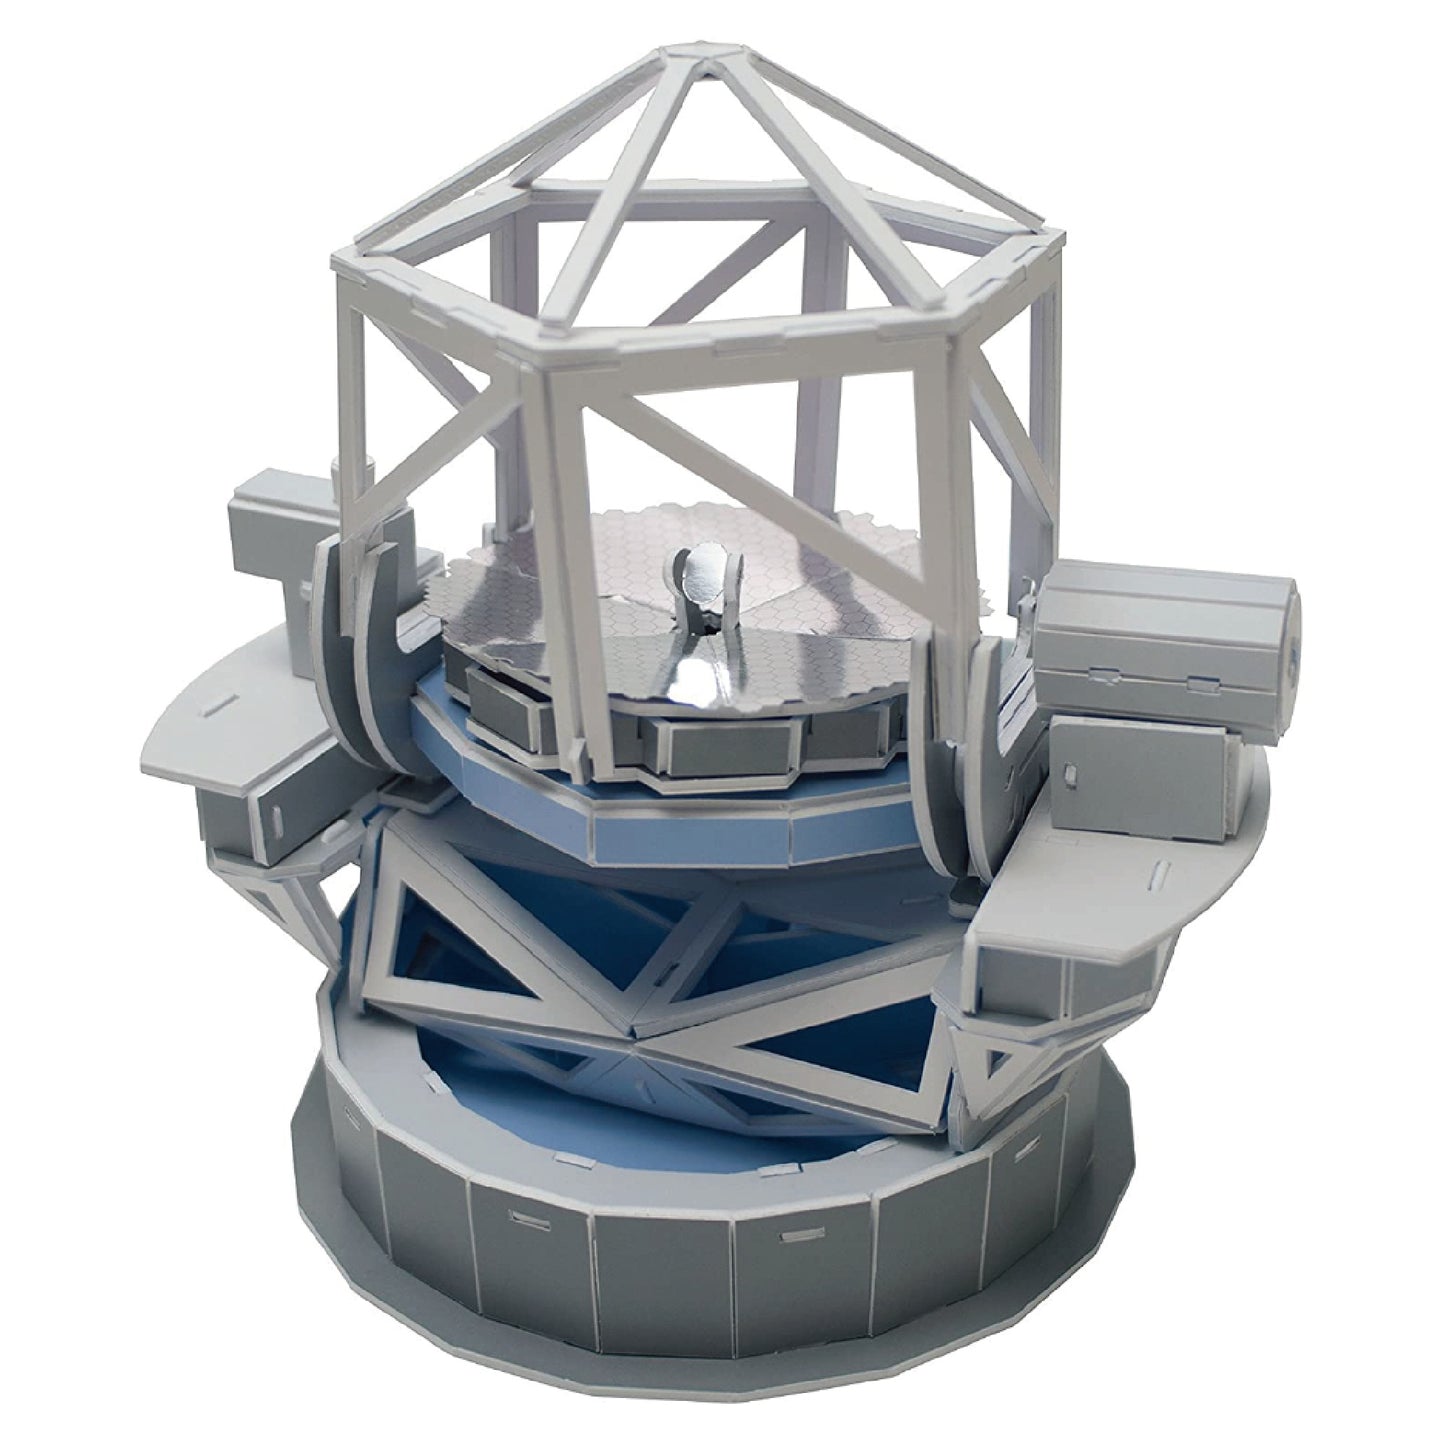  3Dパズル  工作キット 次世代超大型望遠鏡TMT 01